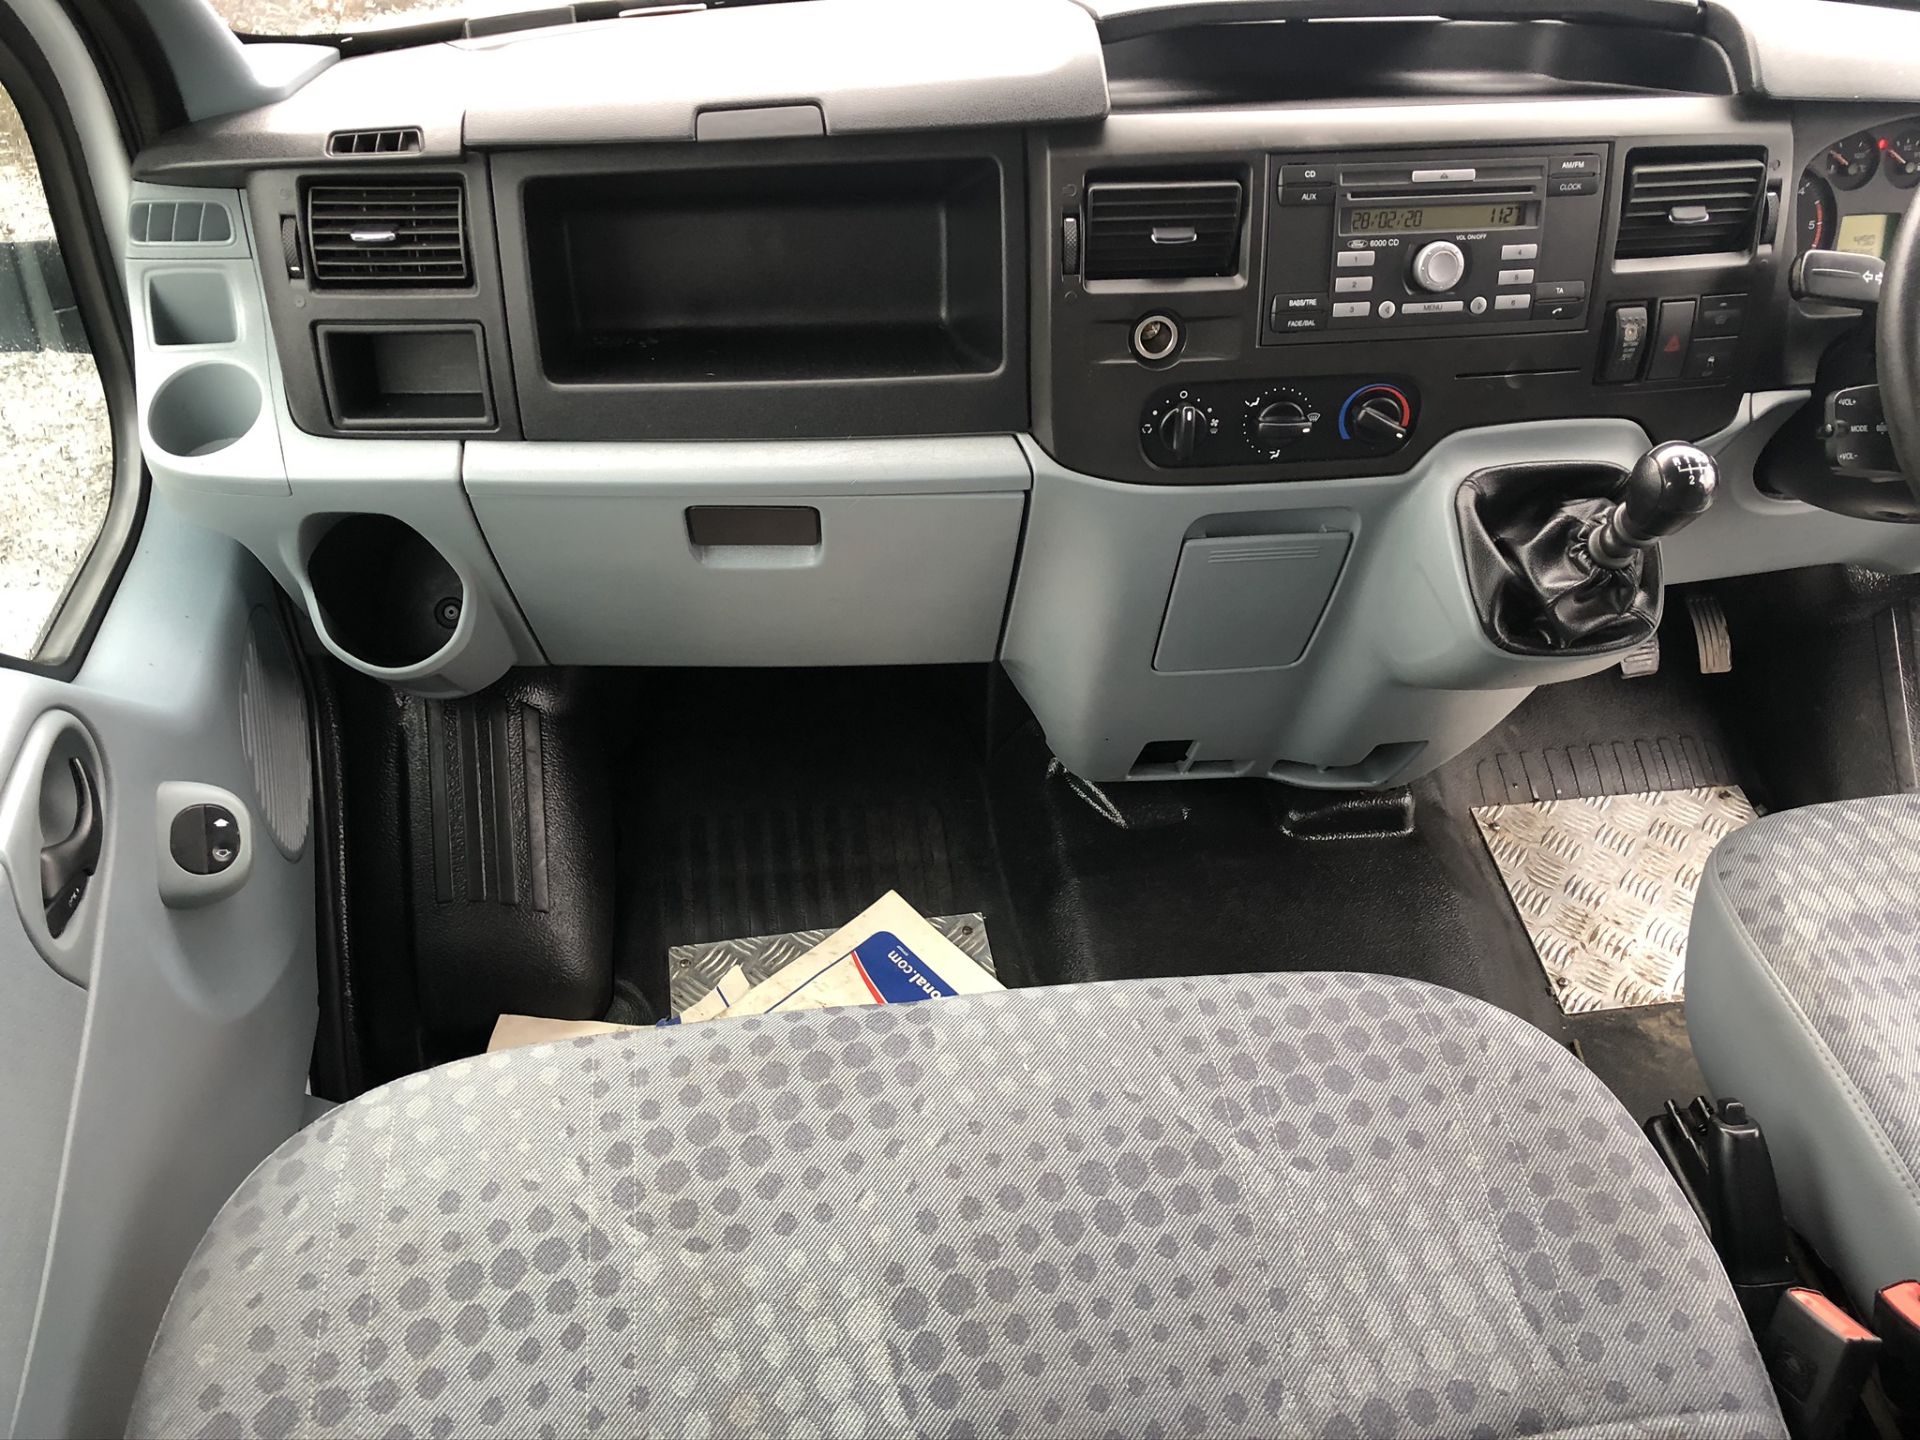 Ford Transit Welfare Van | LT13 ZXD | 57,345 miles - Image 12 of 14